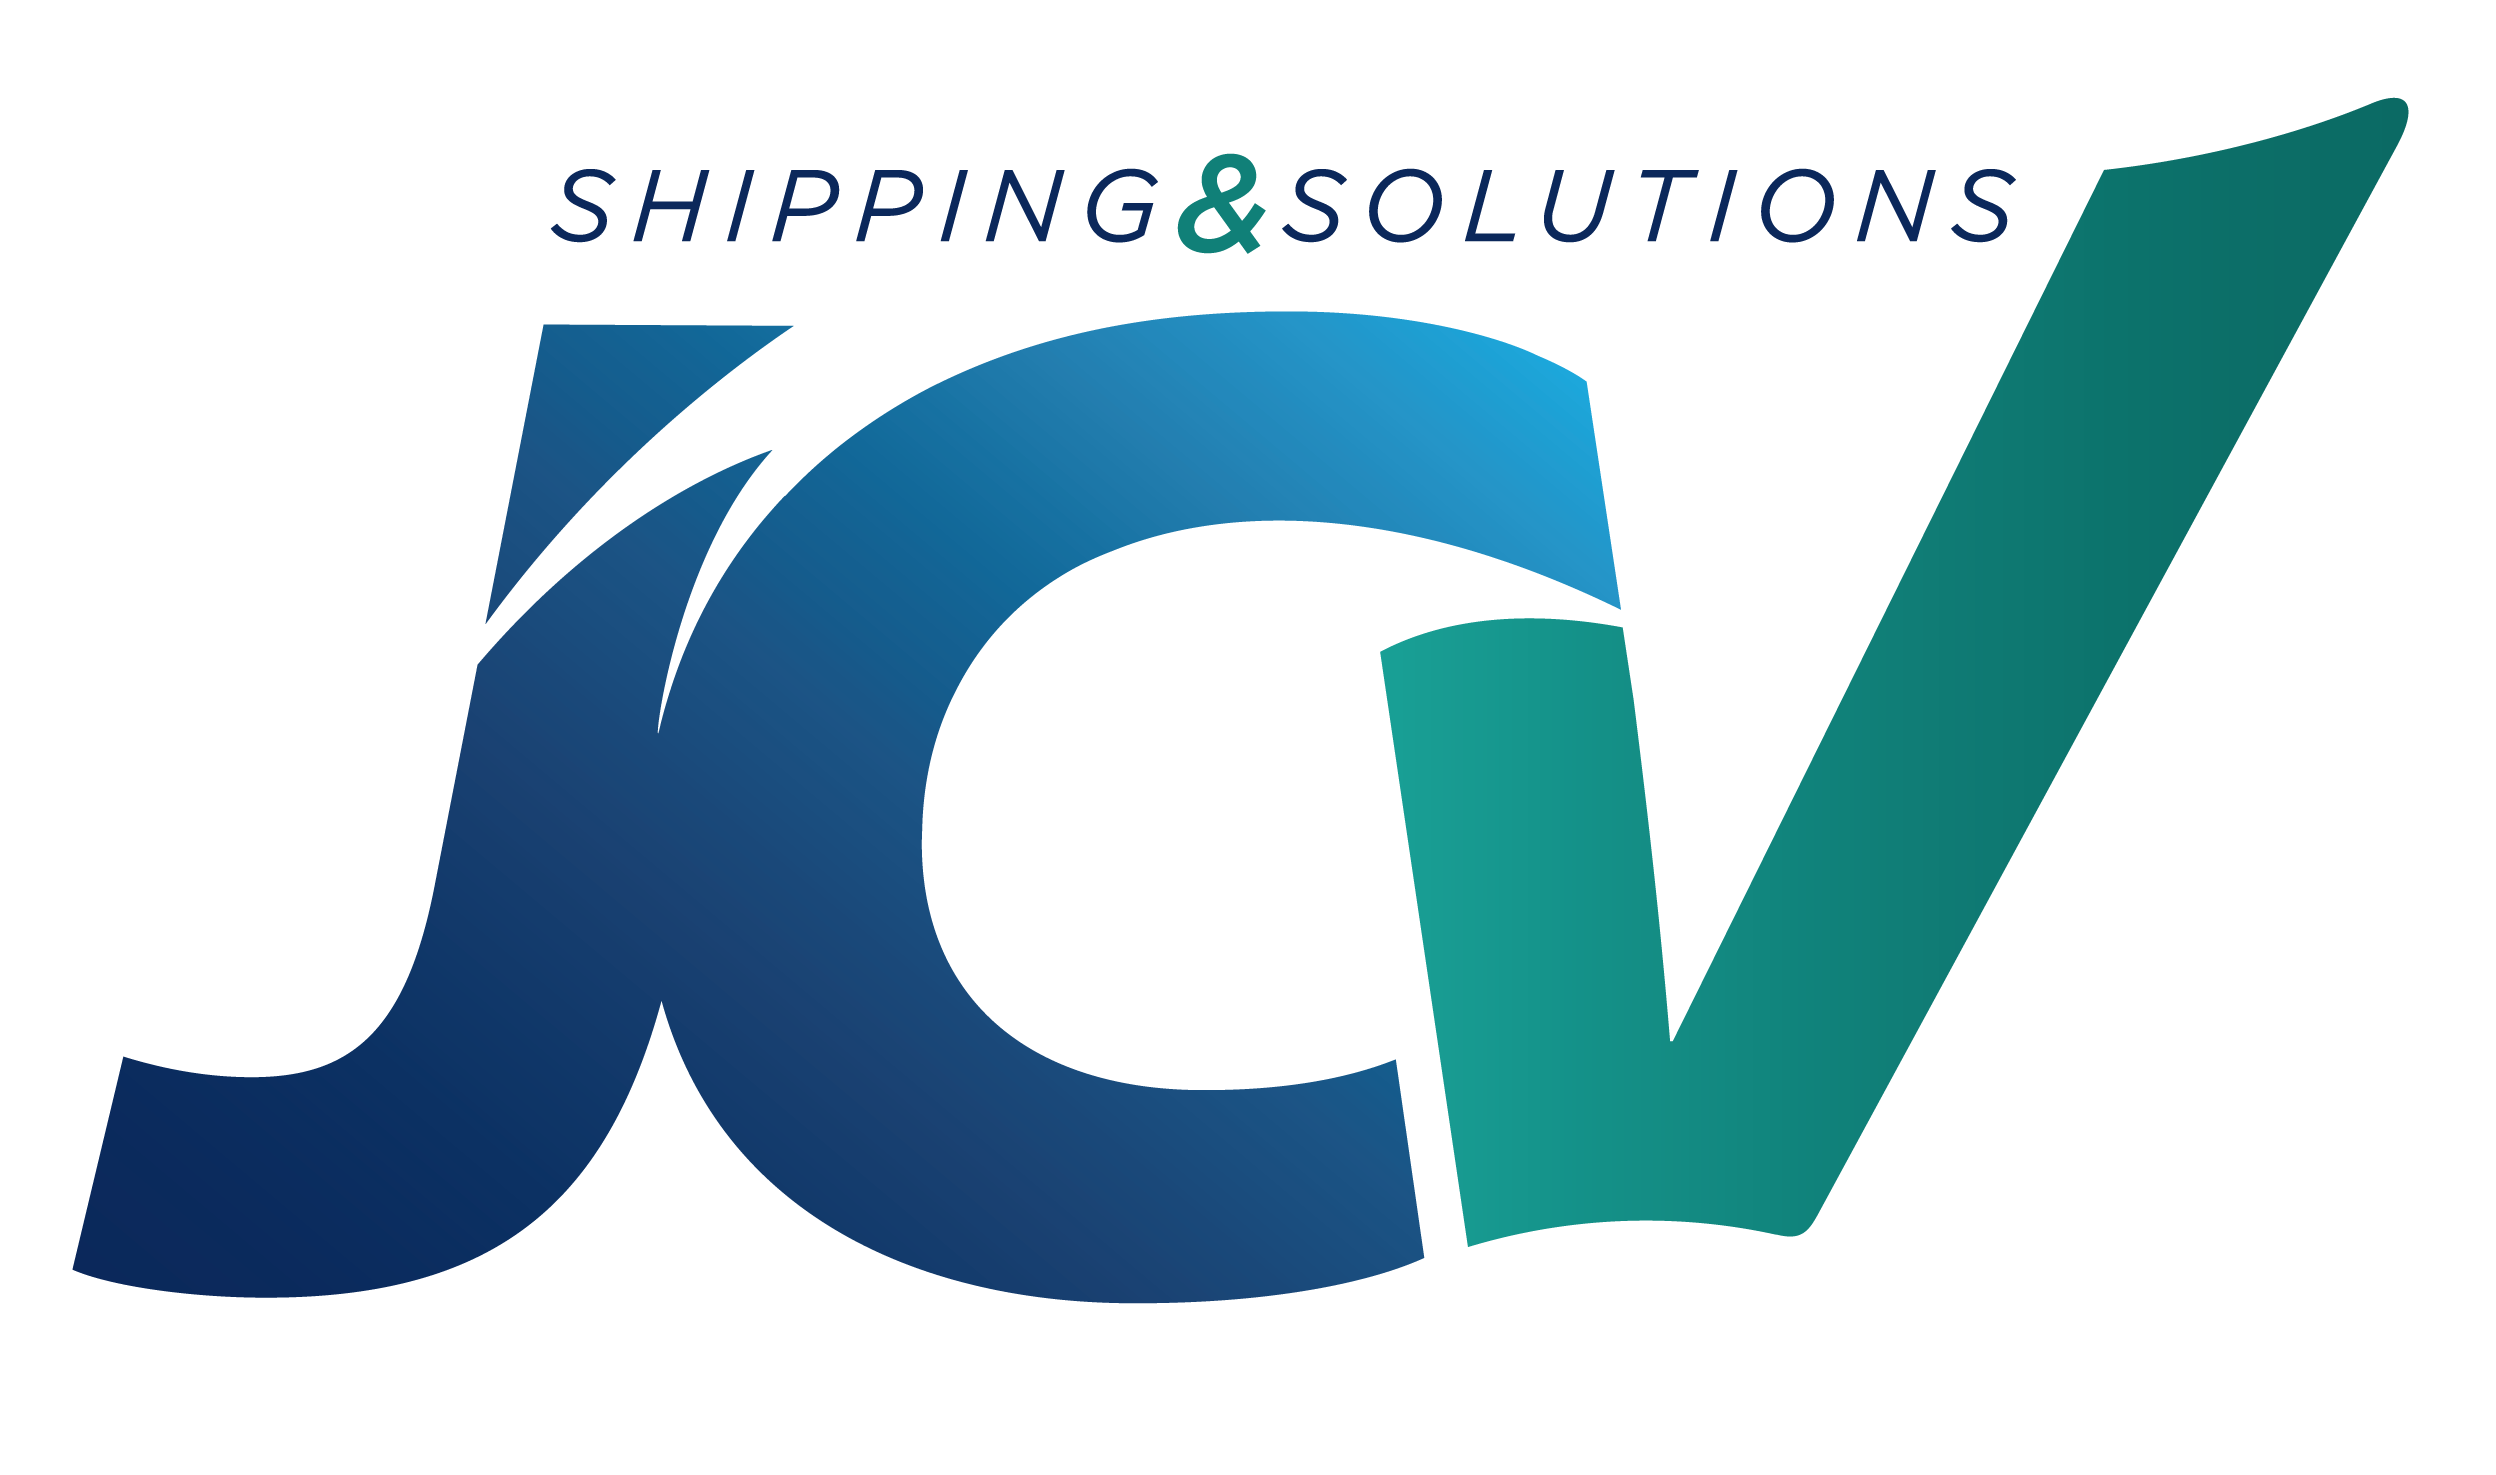 JCV Shipping & Solutions